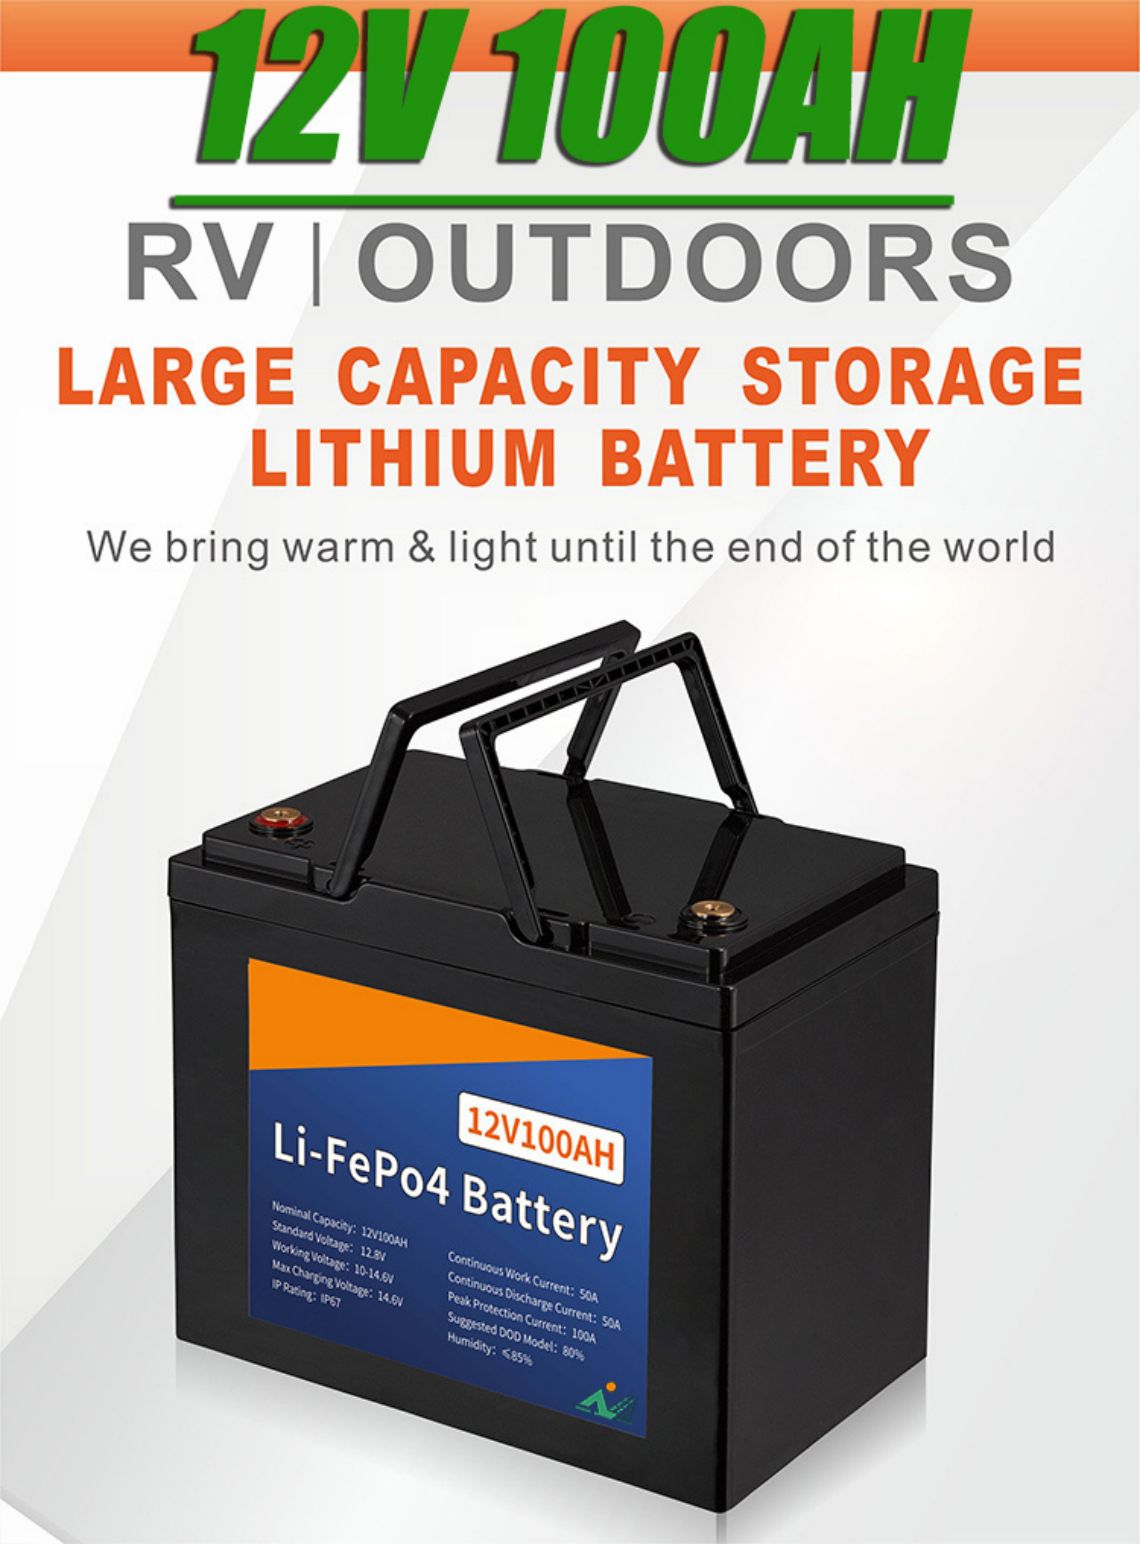 lifopo4 लिथियम बॅटरी